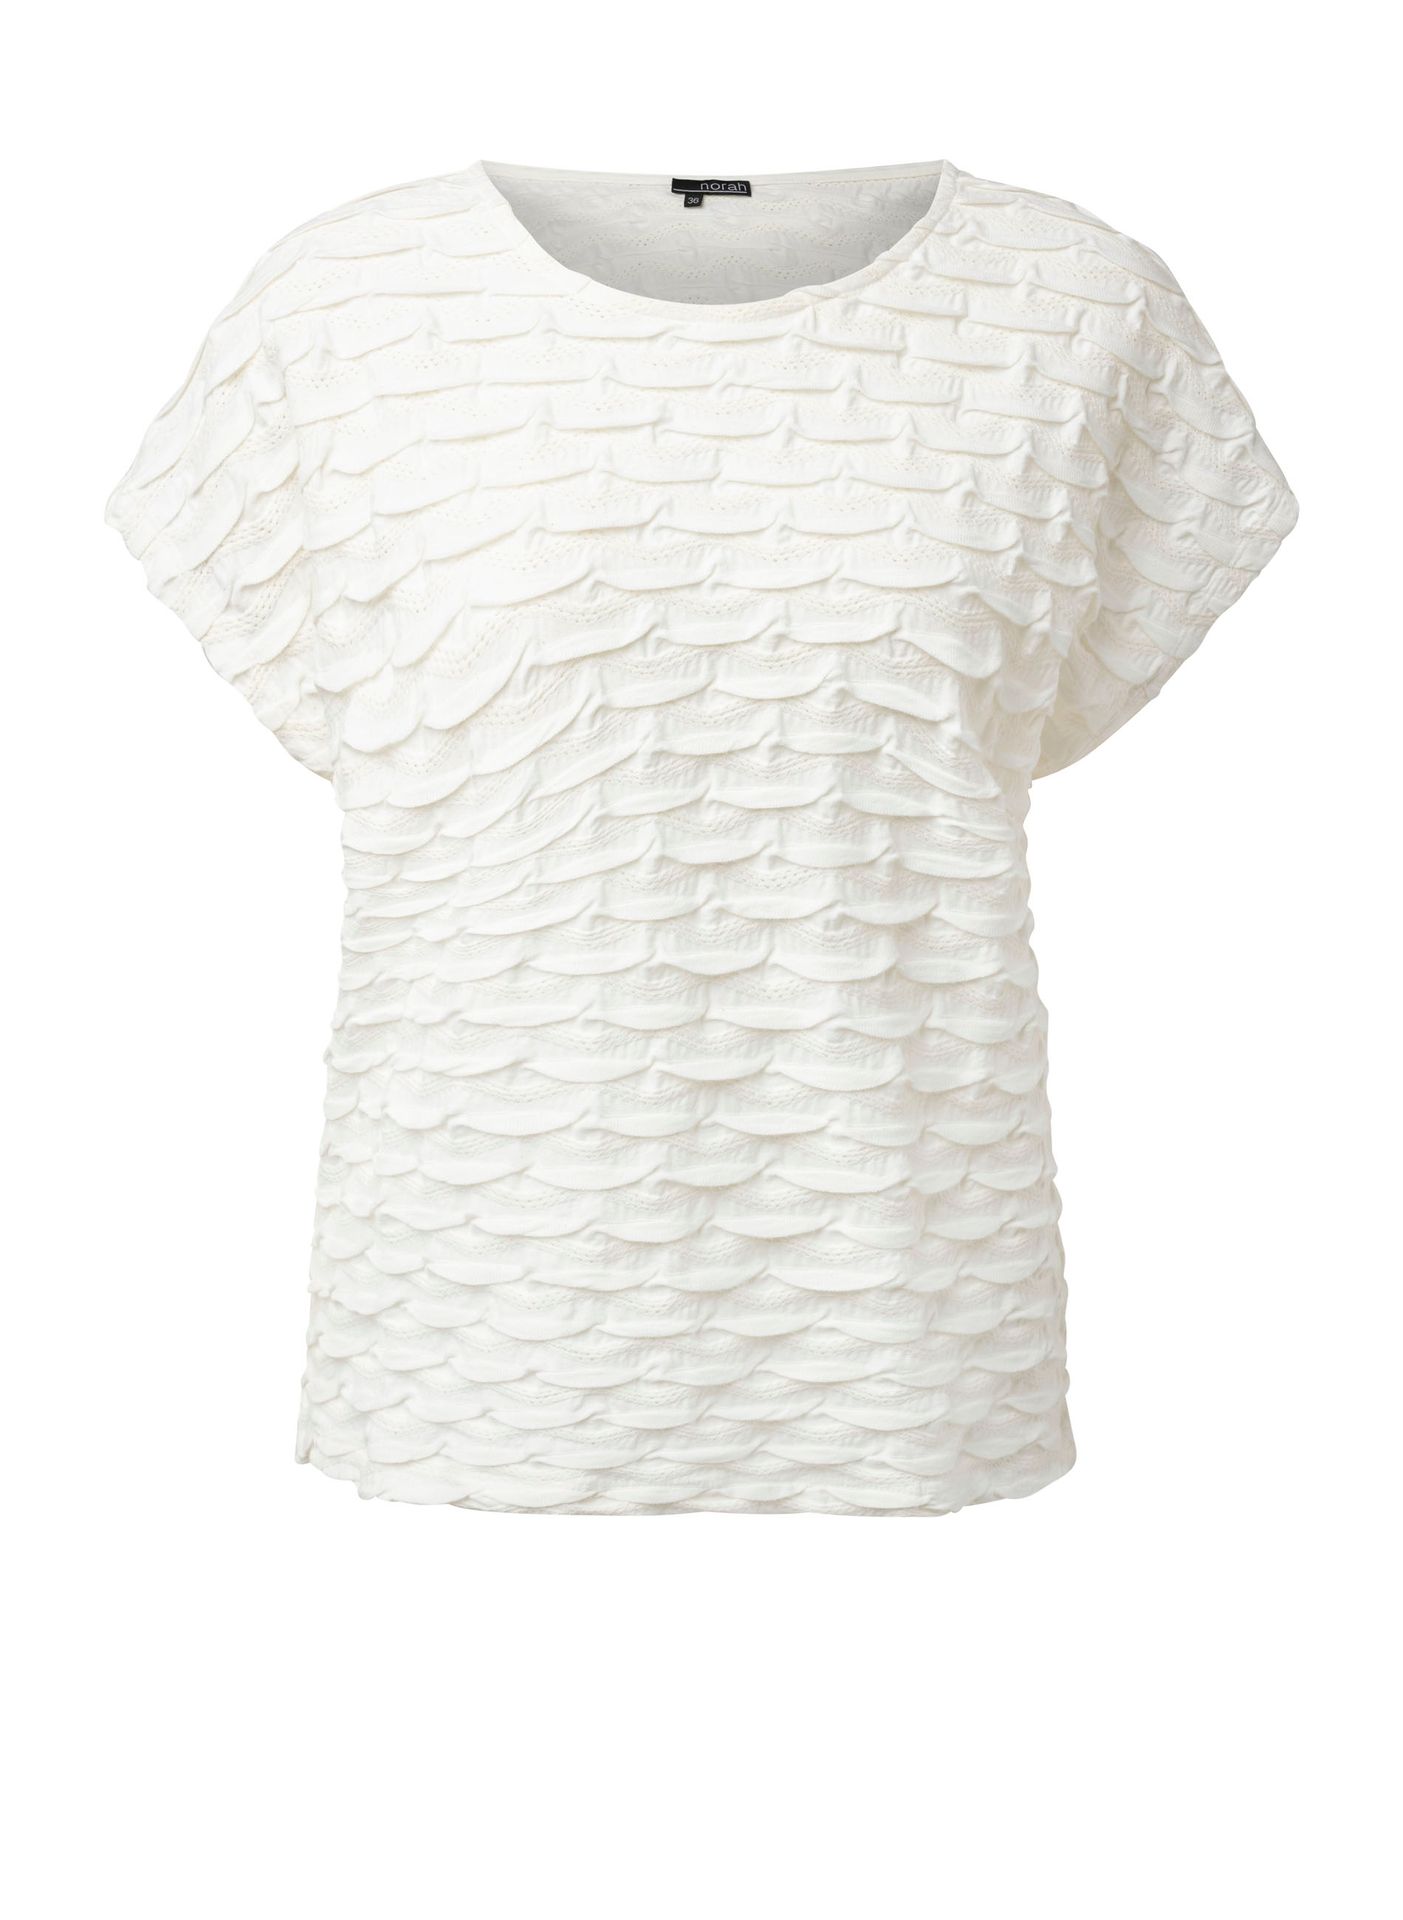 Norah Off white shirt off-white 214521-101